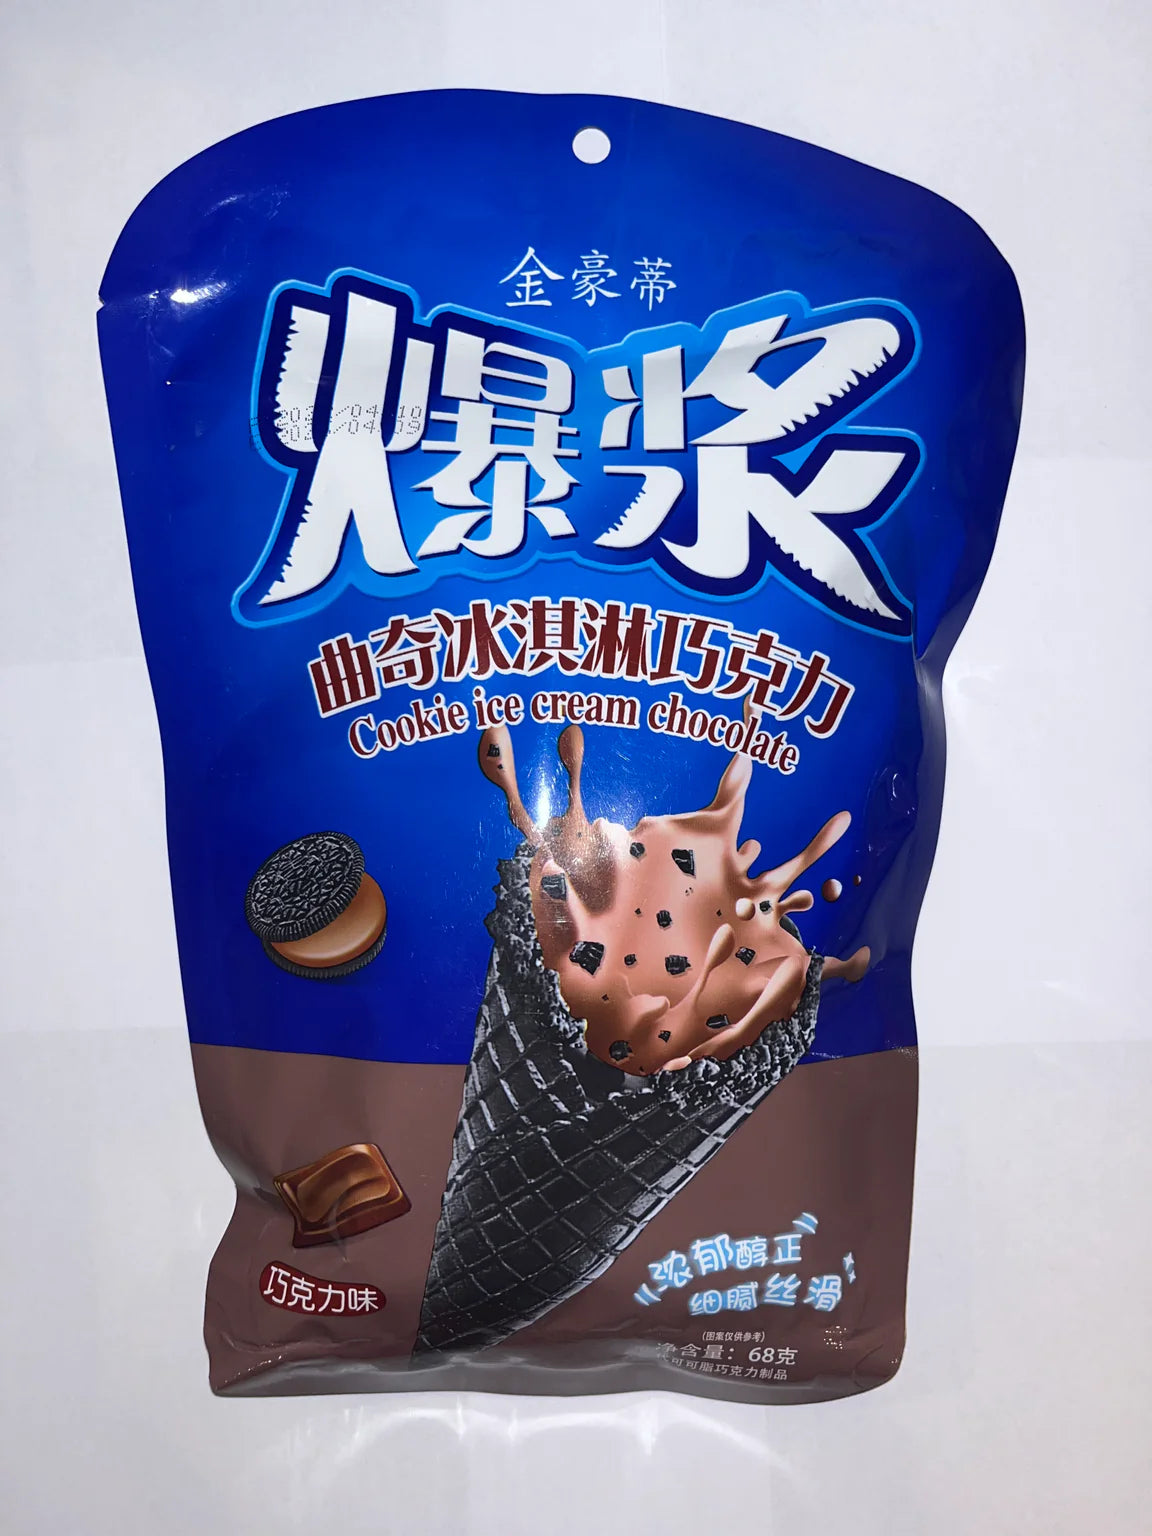 Oreo Cookie Ice Cream chocolate